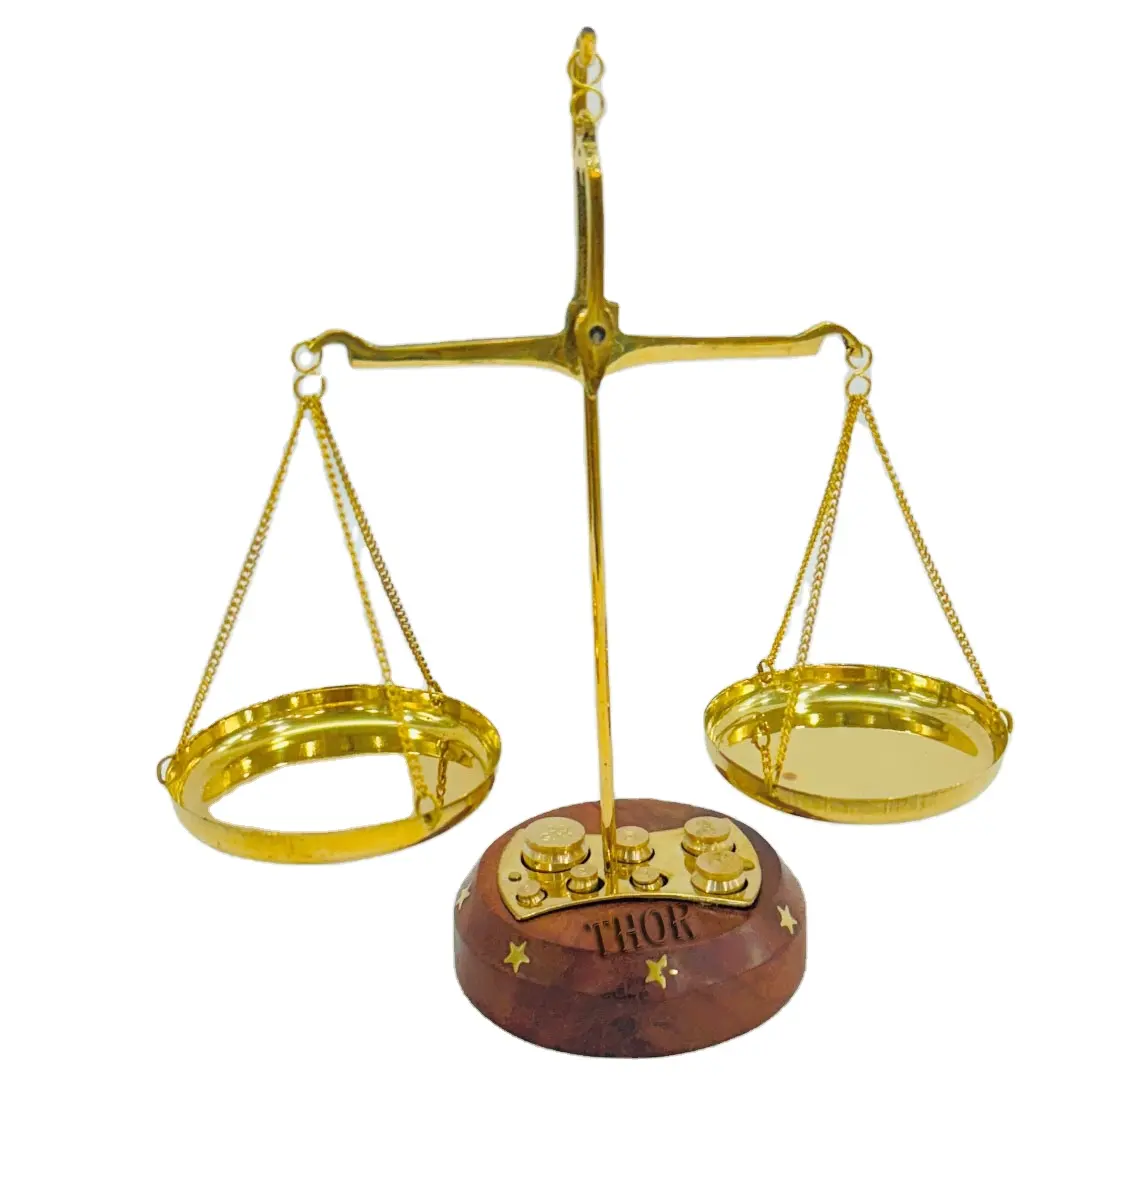 8 इंच सुंदर पीतल प्राचीन वजन तराजू संतुलन न्याय कानून तराजू सजावट पूर्ण वजन के साथ दिव्य आइटम आभूषण